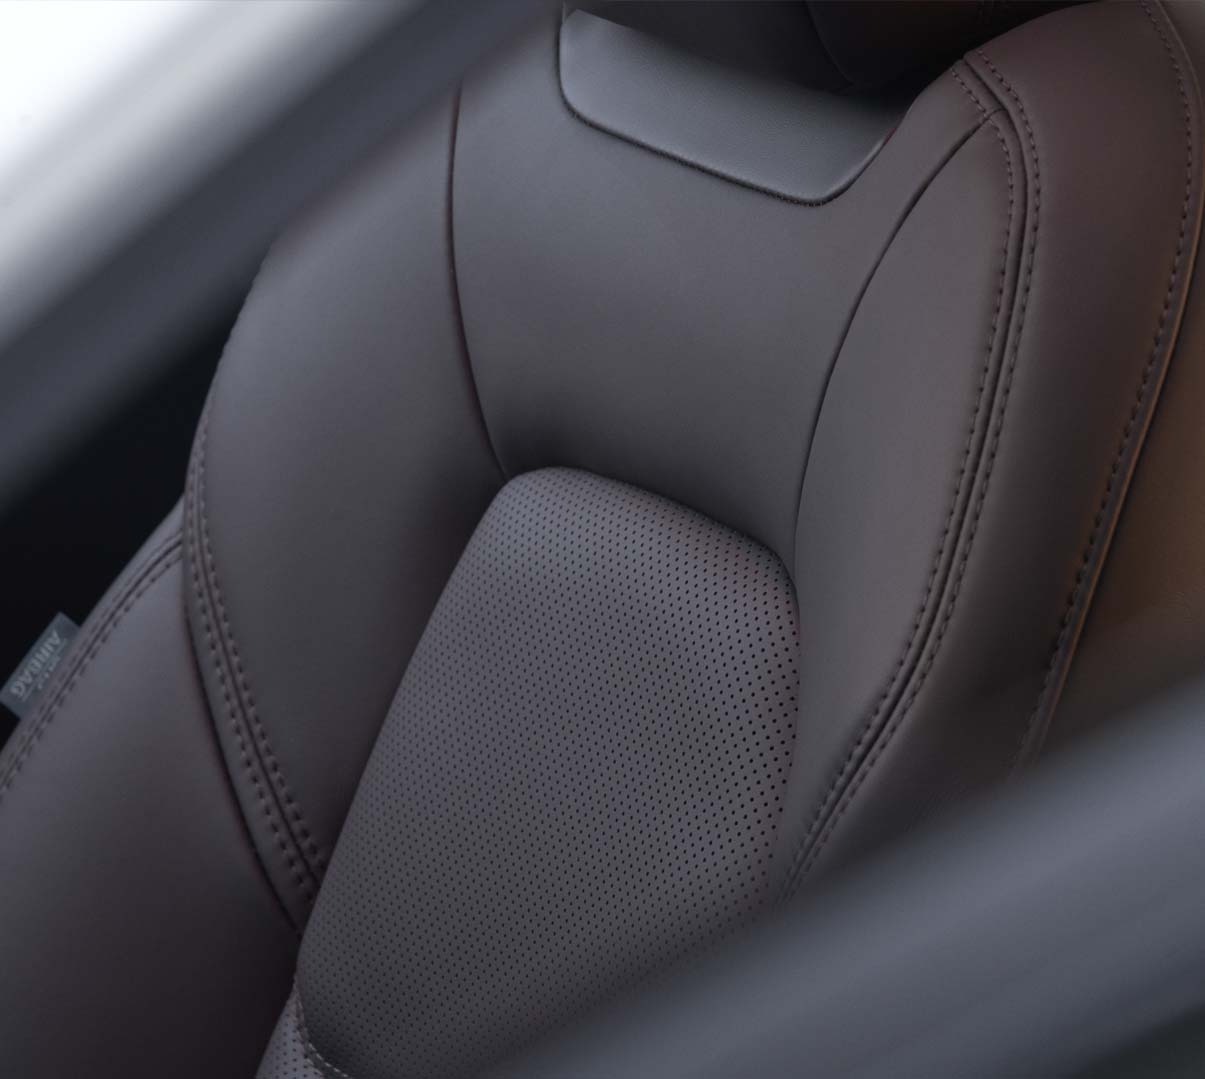 Mazda CX-5 leather seat